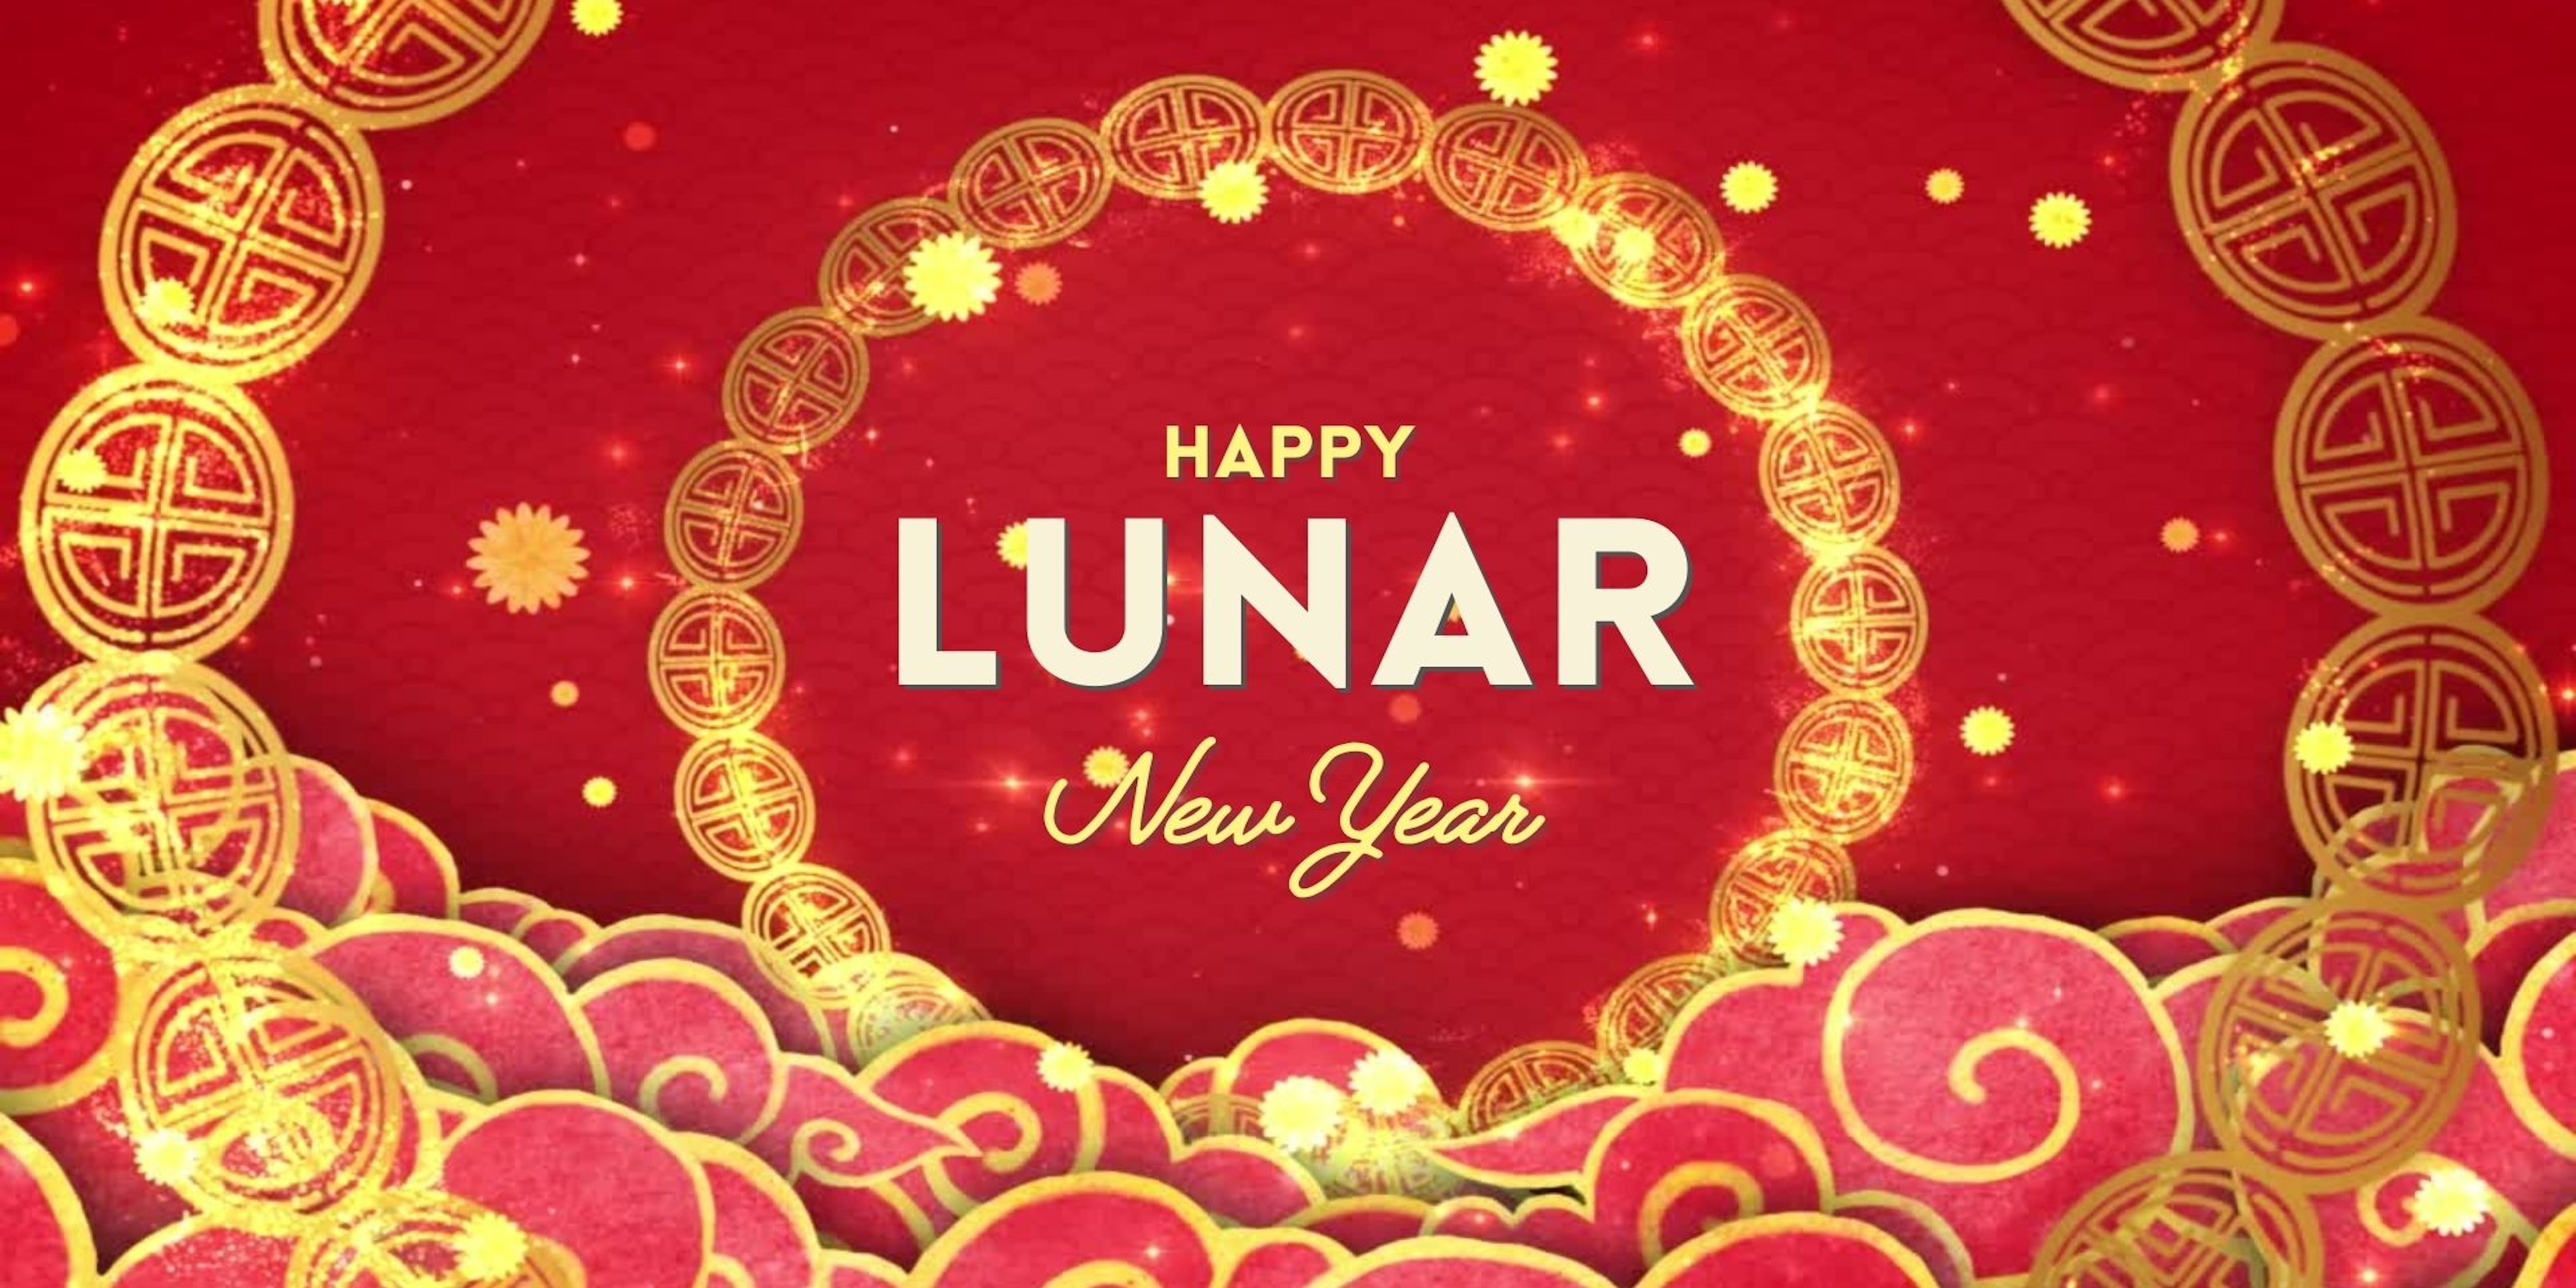 Happy Lunar New Year Header Image